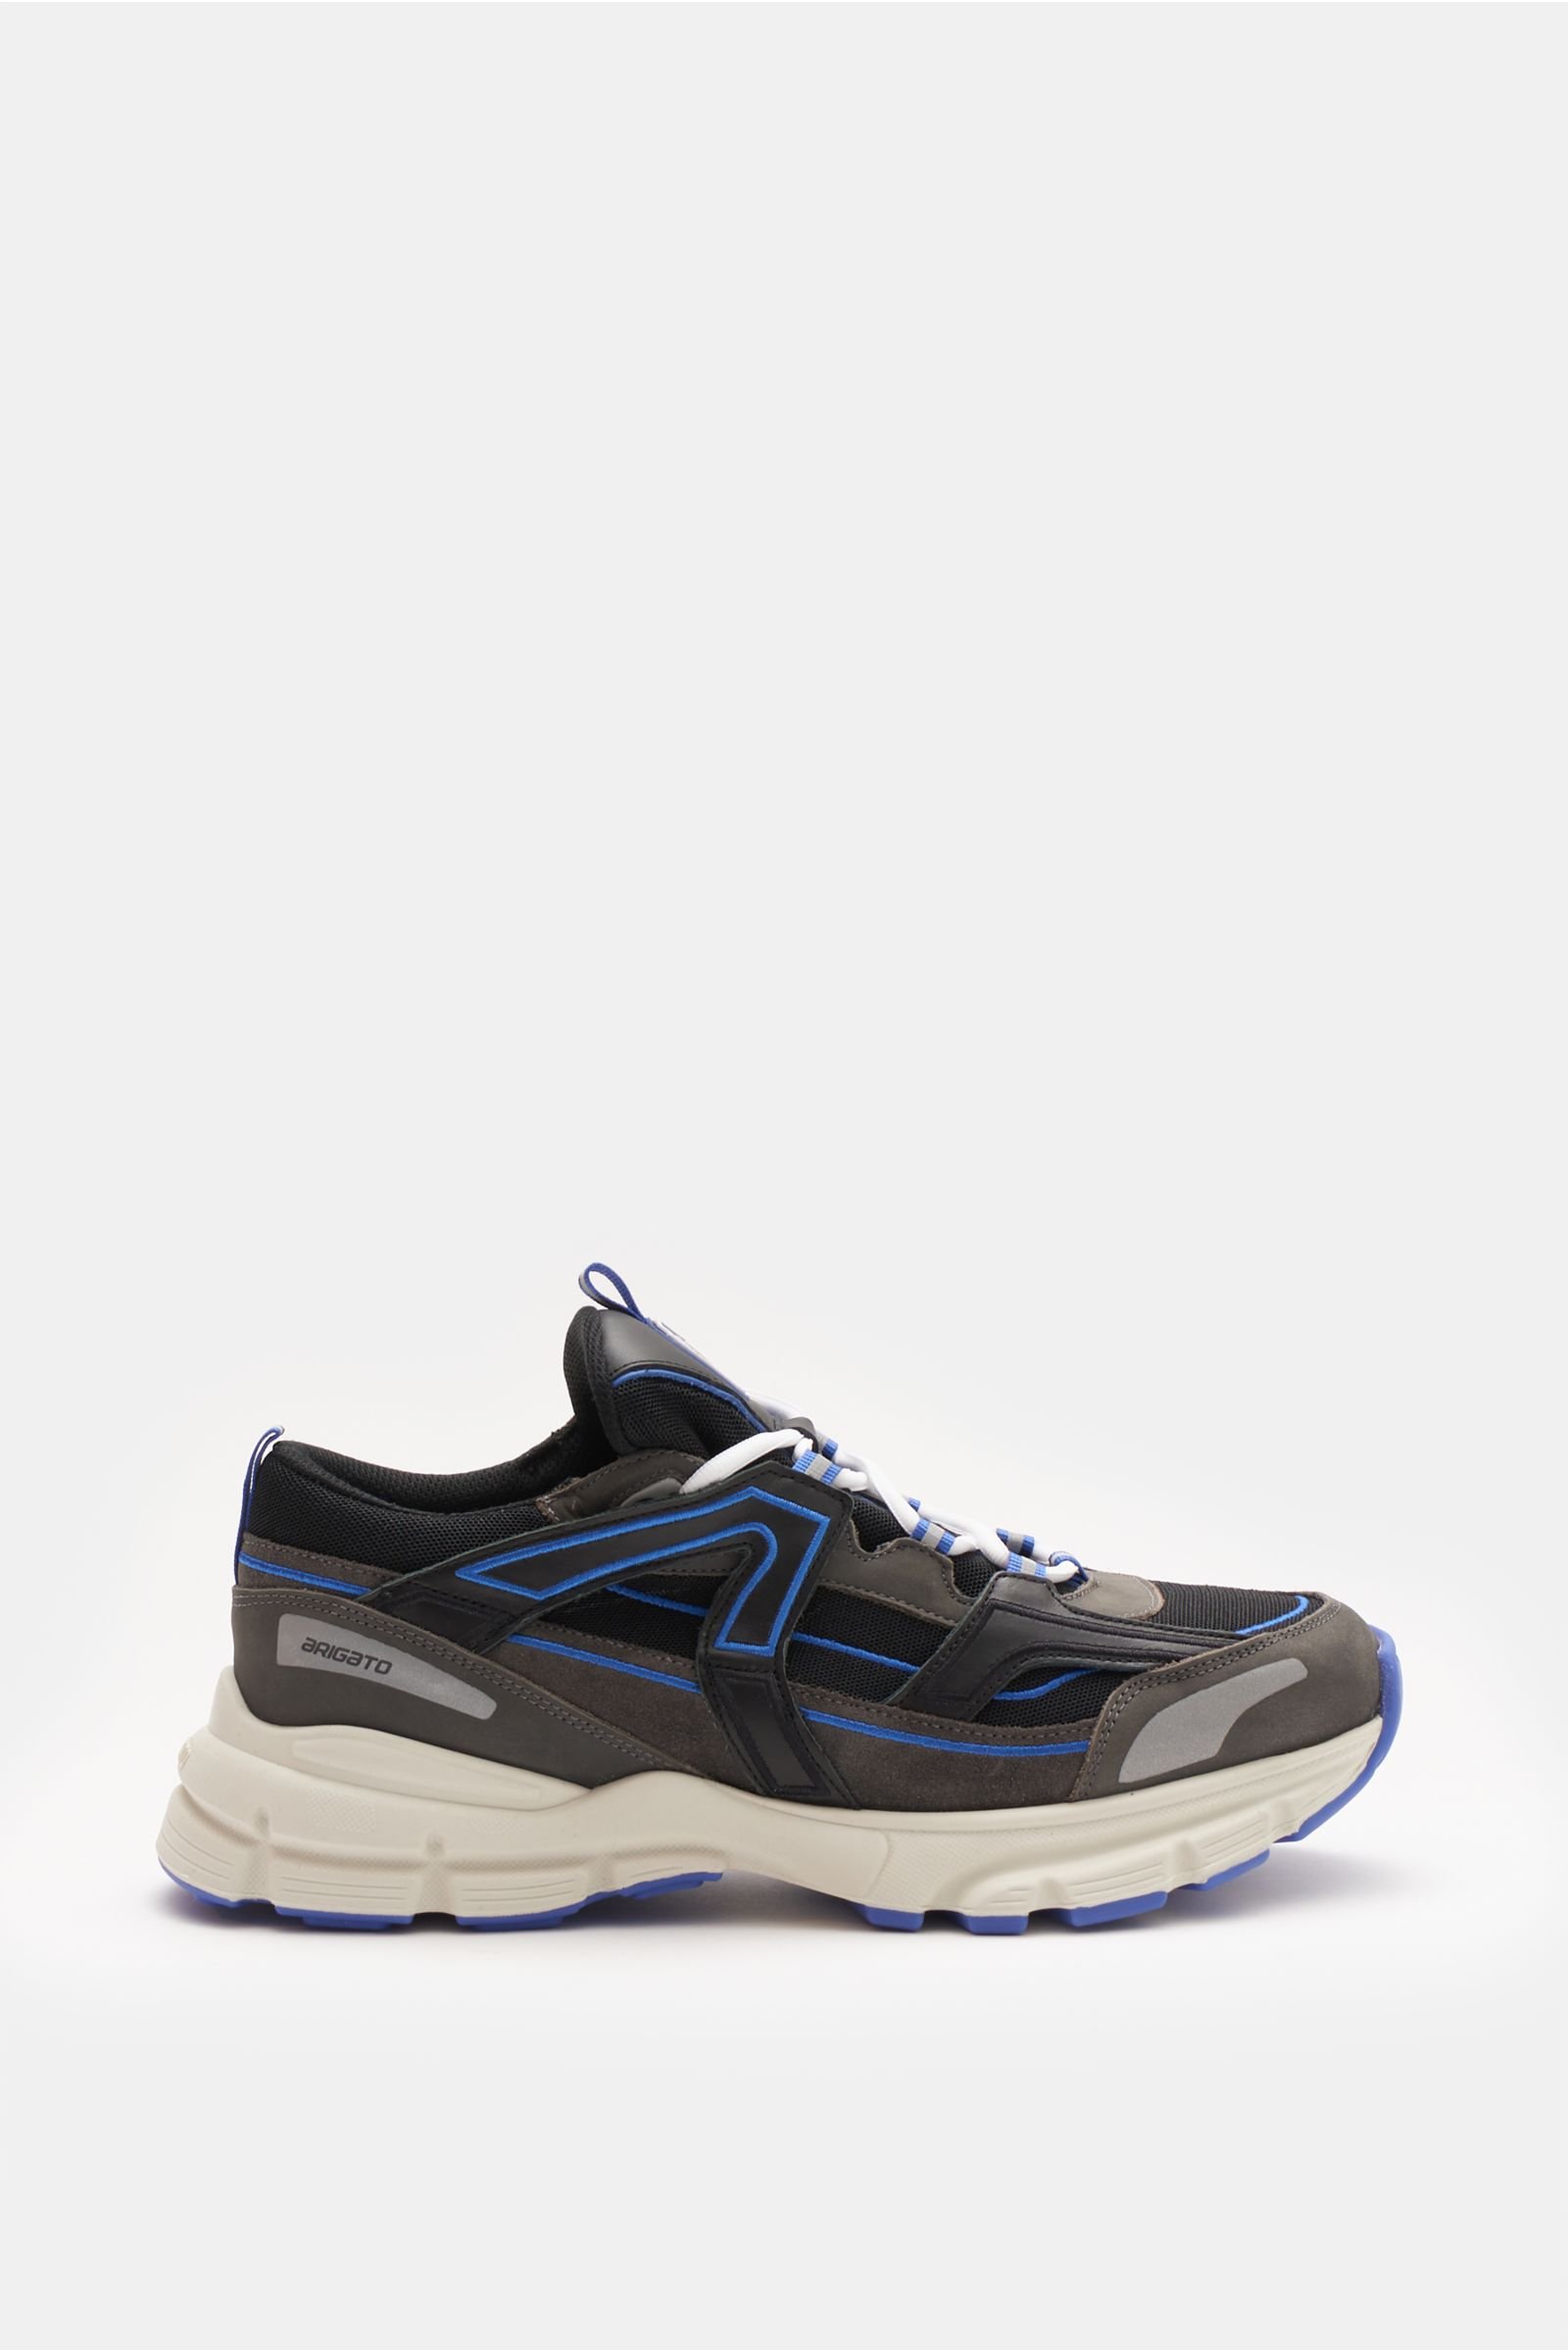 Sneaker 'Marathon R-Trail' dunkelgrau/schwarz/blau